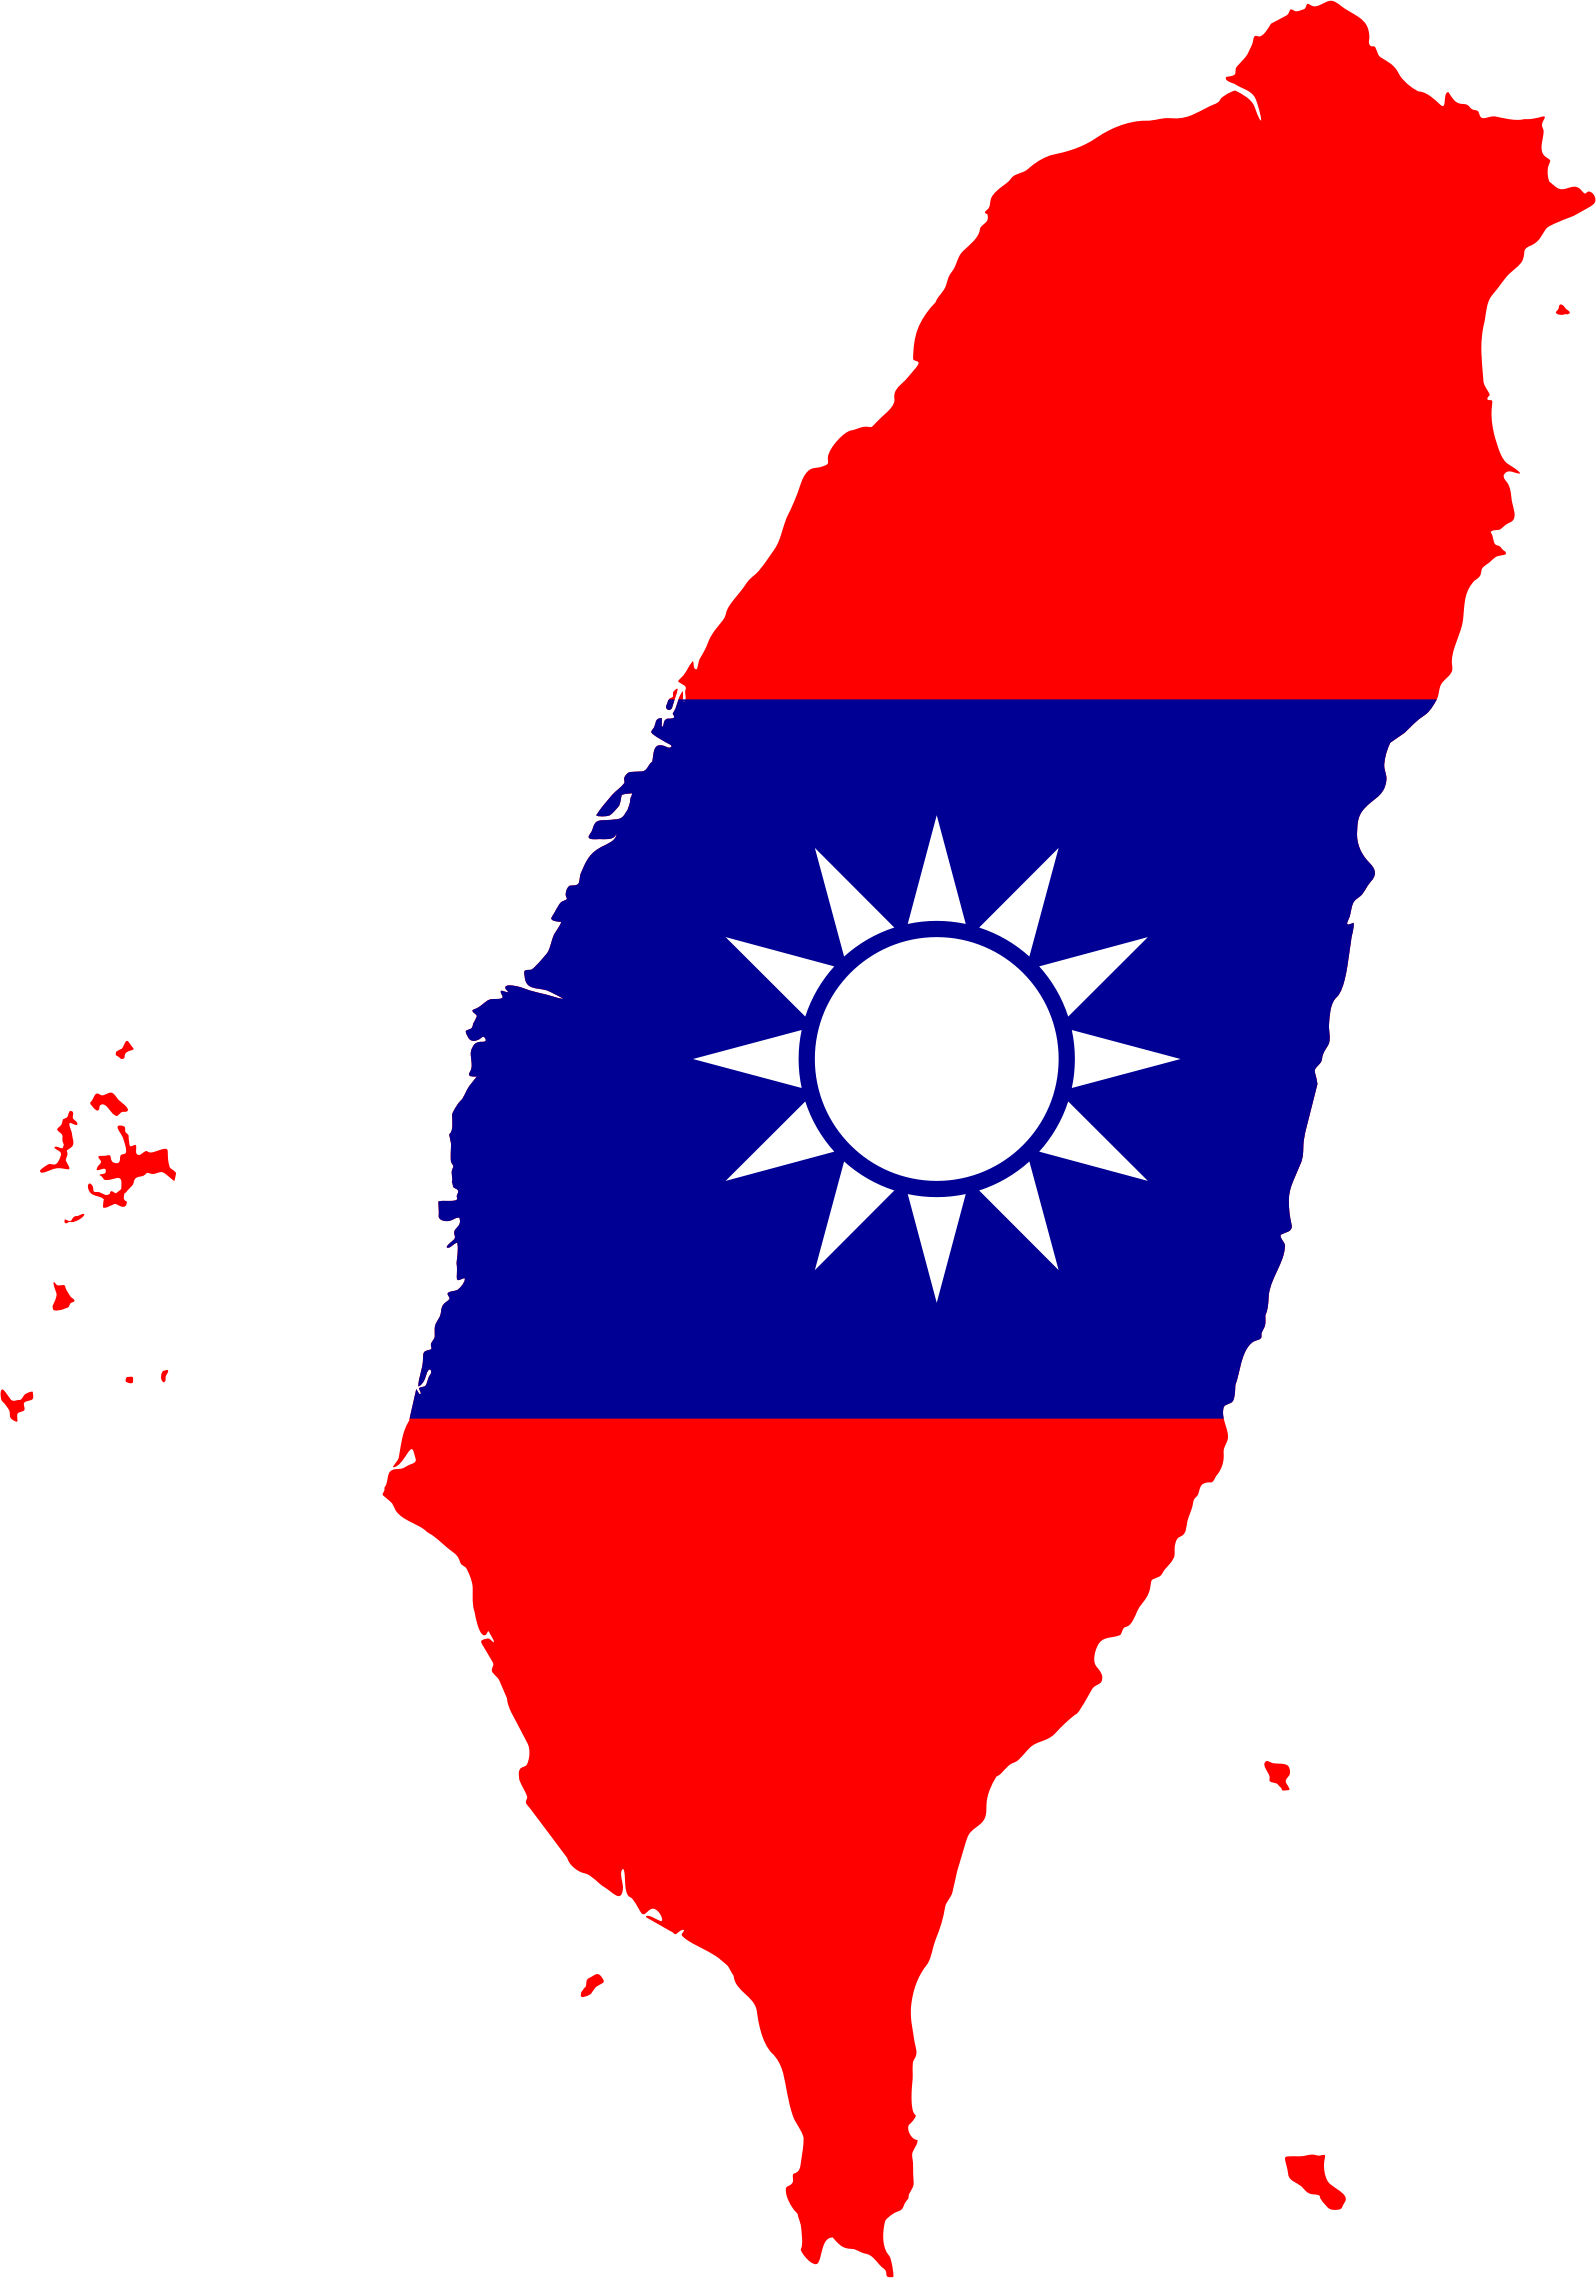 Taiwan flag image - free down